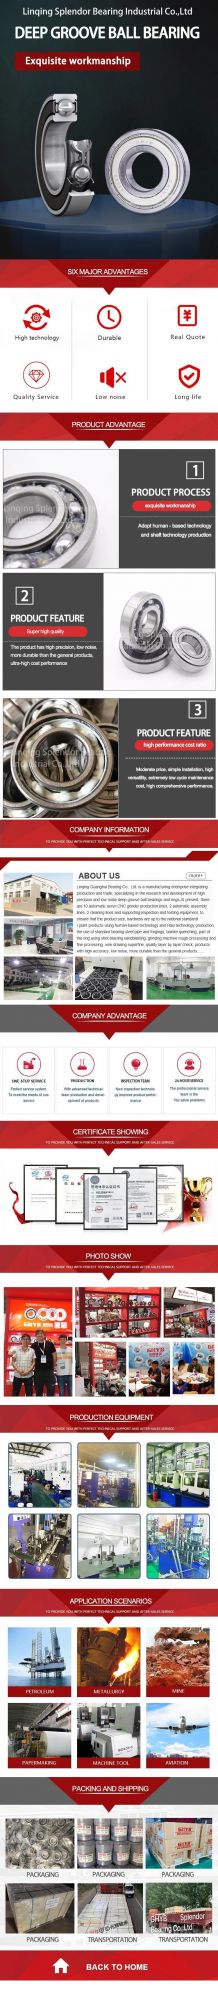 China Factory Distributor Supplier of Deep Groove Ball Bearings for Motors, Compressors, Alternators 6007-2rz/Z2V2